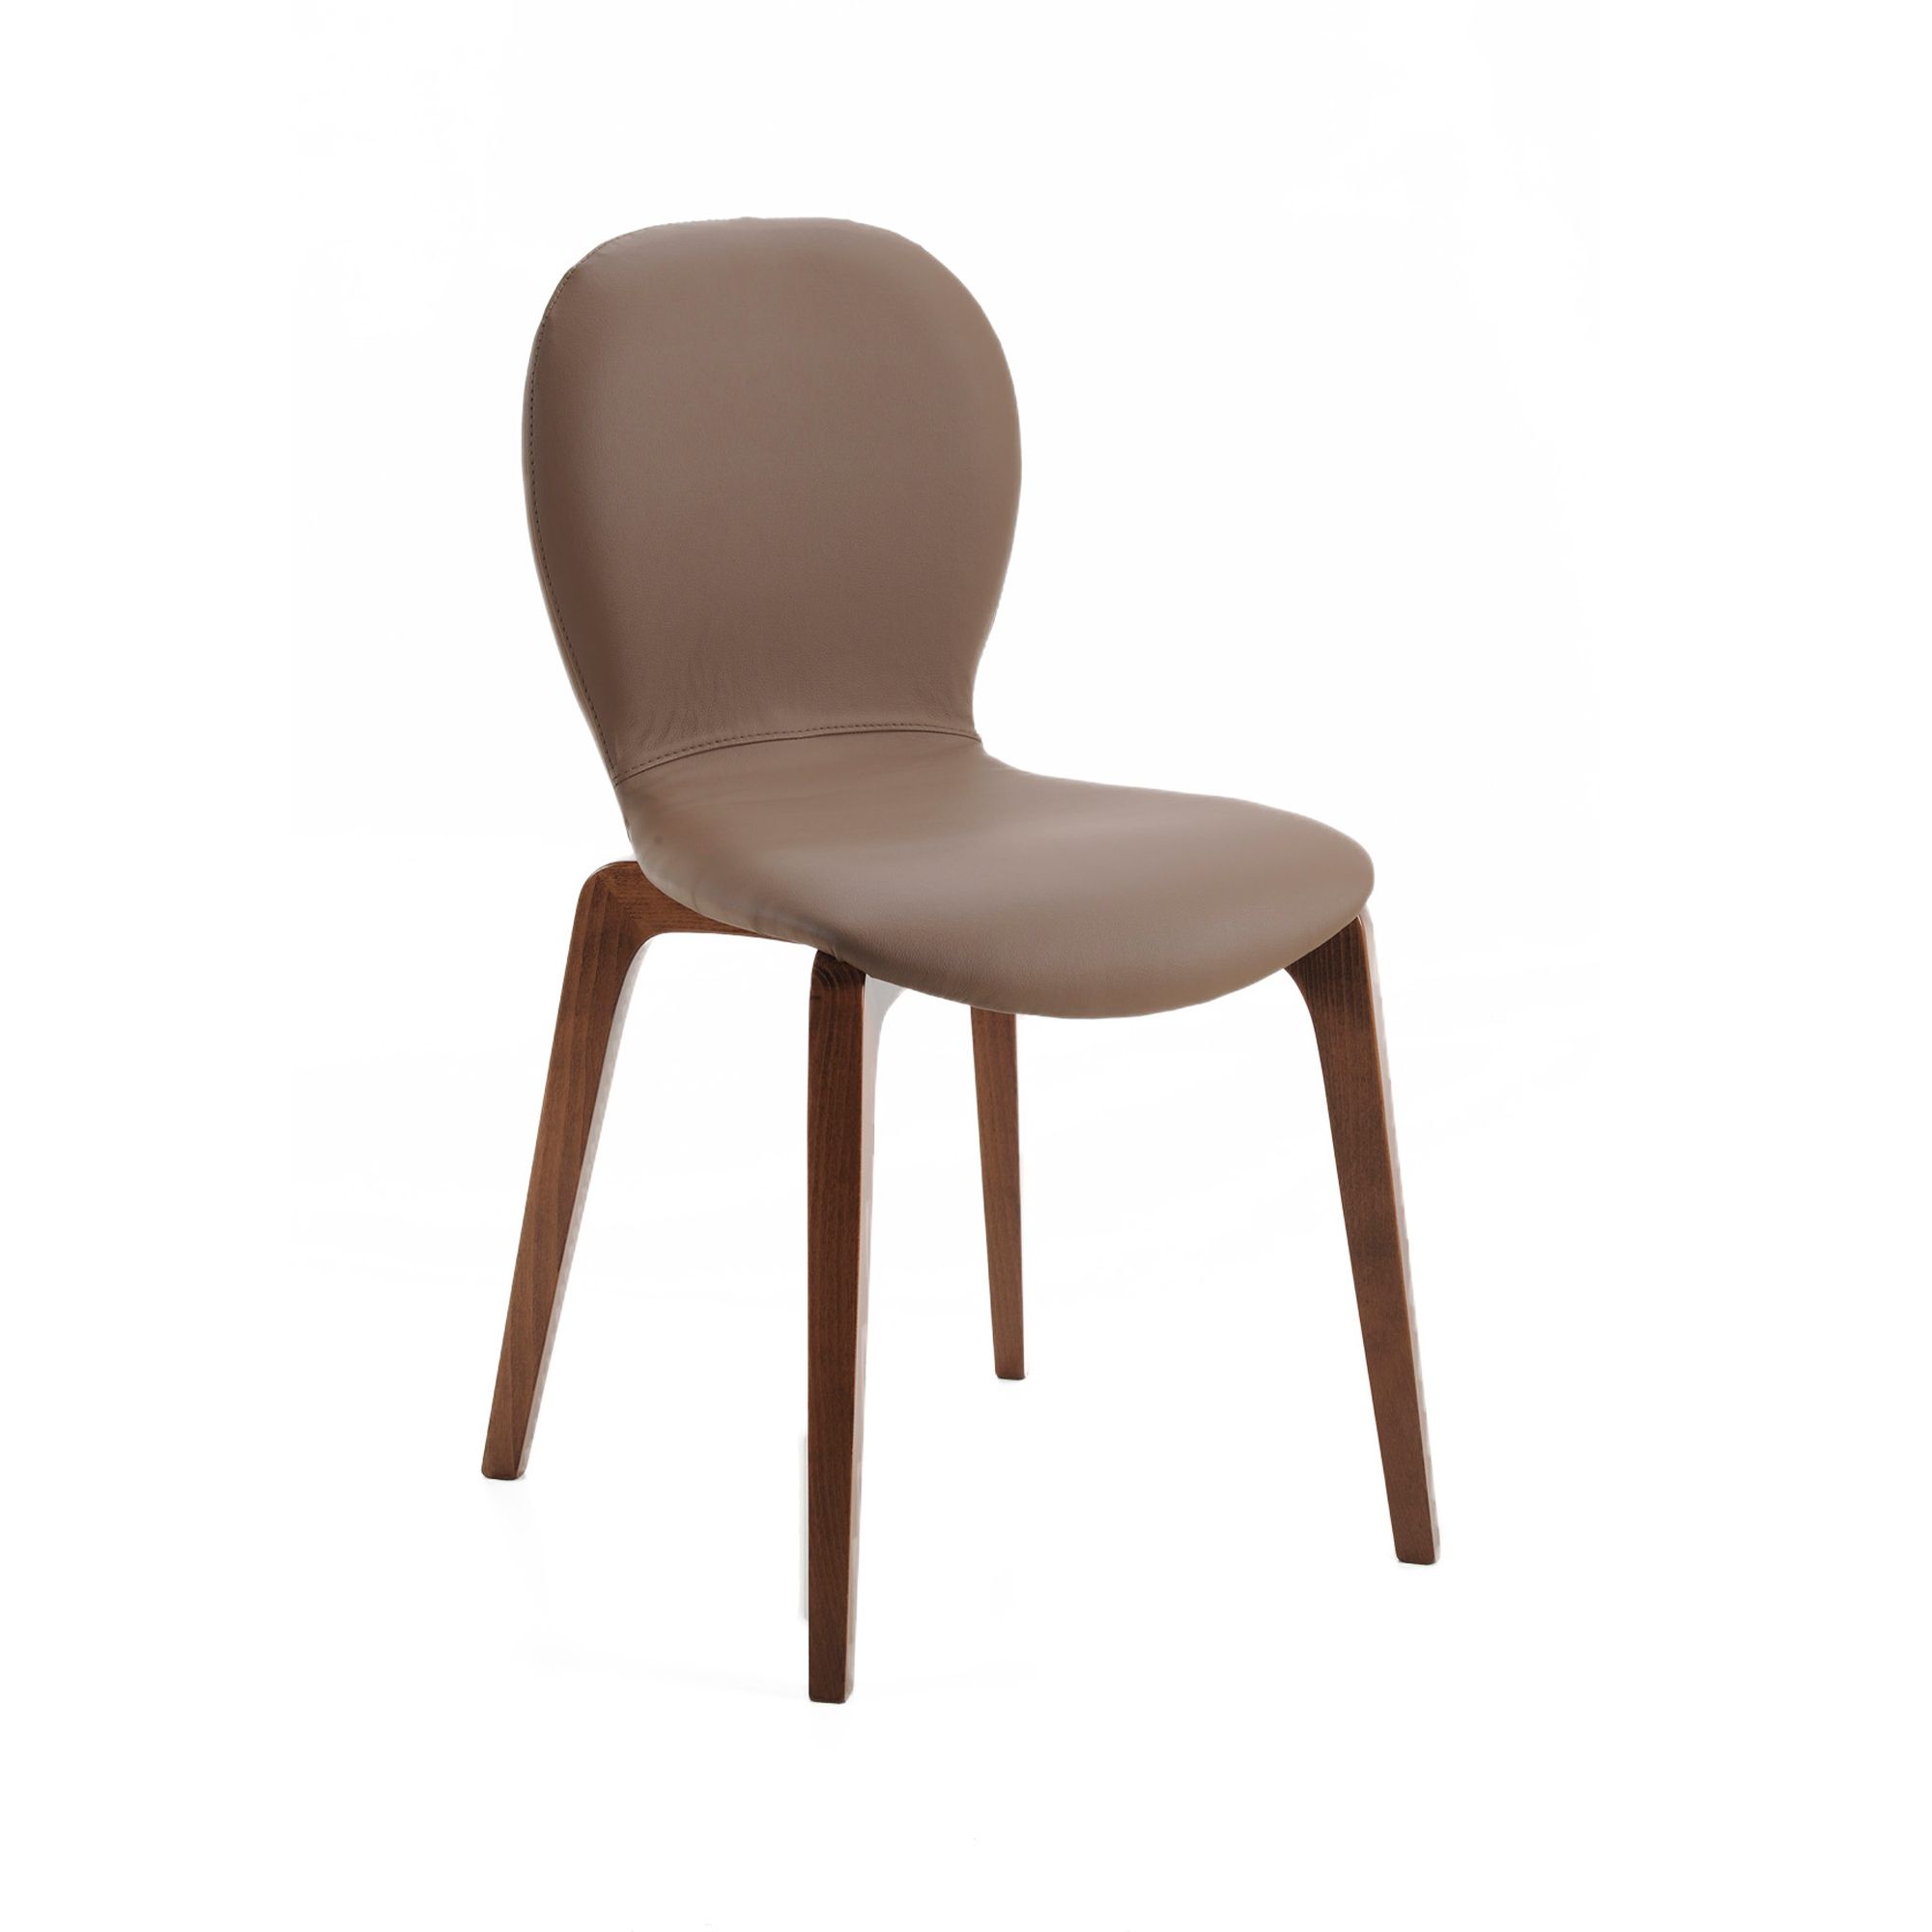 Model 857 chair in modern style